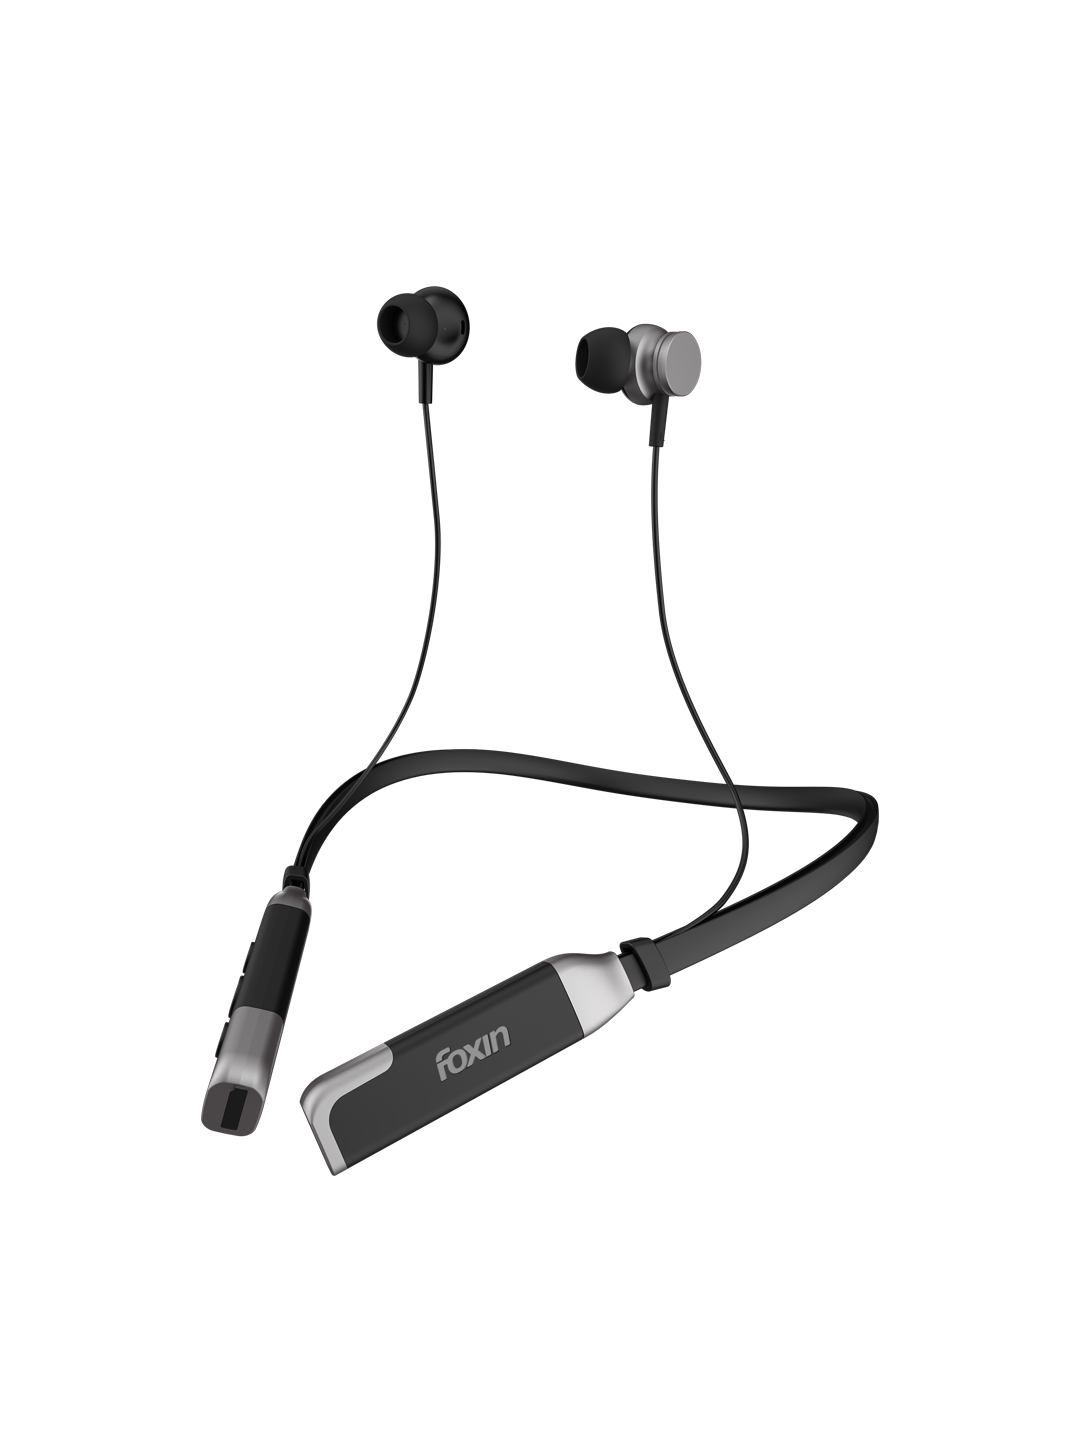 FoxBeat 111 Wireless Neckband /neckband earphones/Headsets/gaming headphone